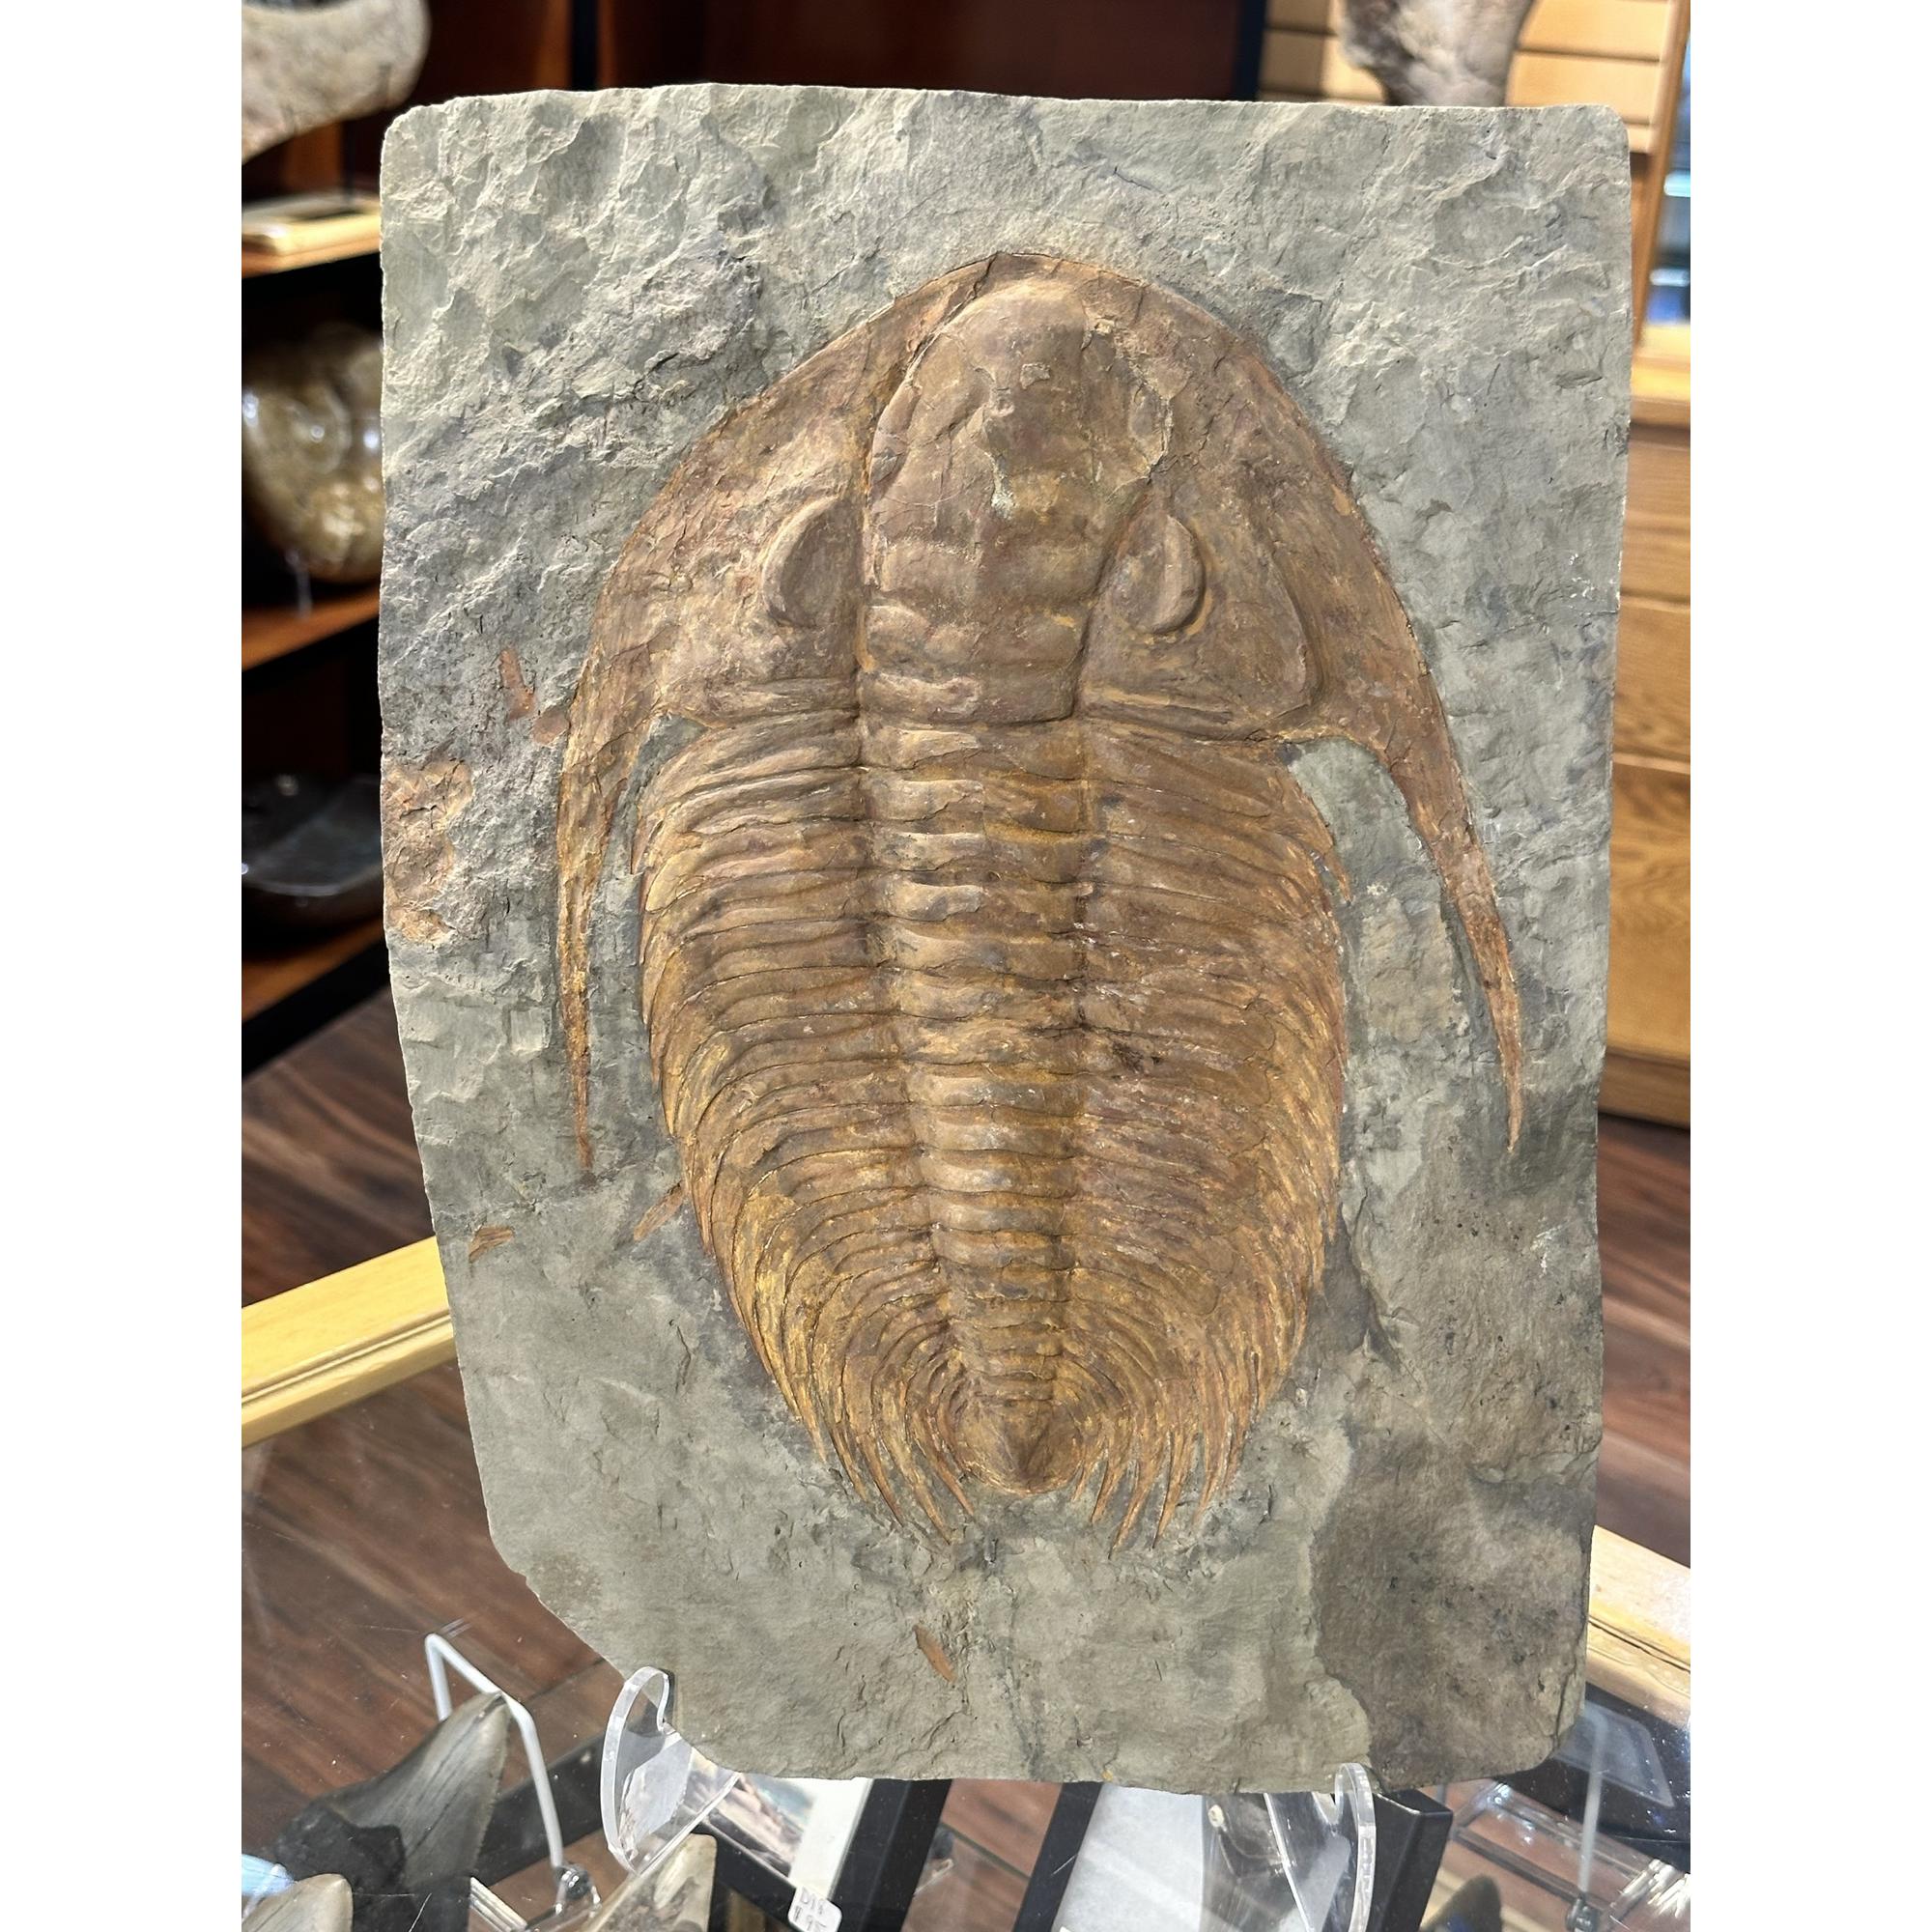 Fossil Paradoxides, Trilobite Prehistoric Online